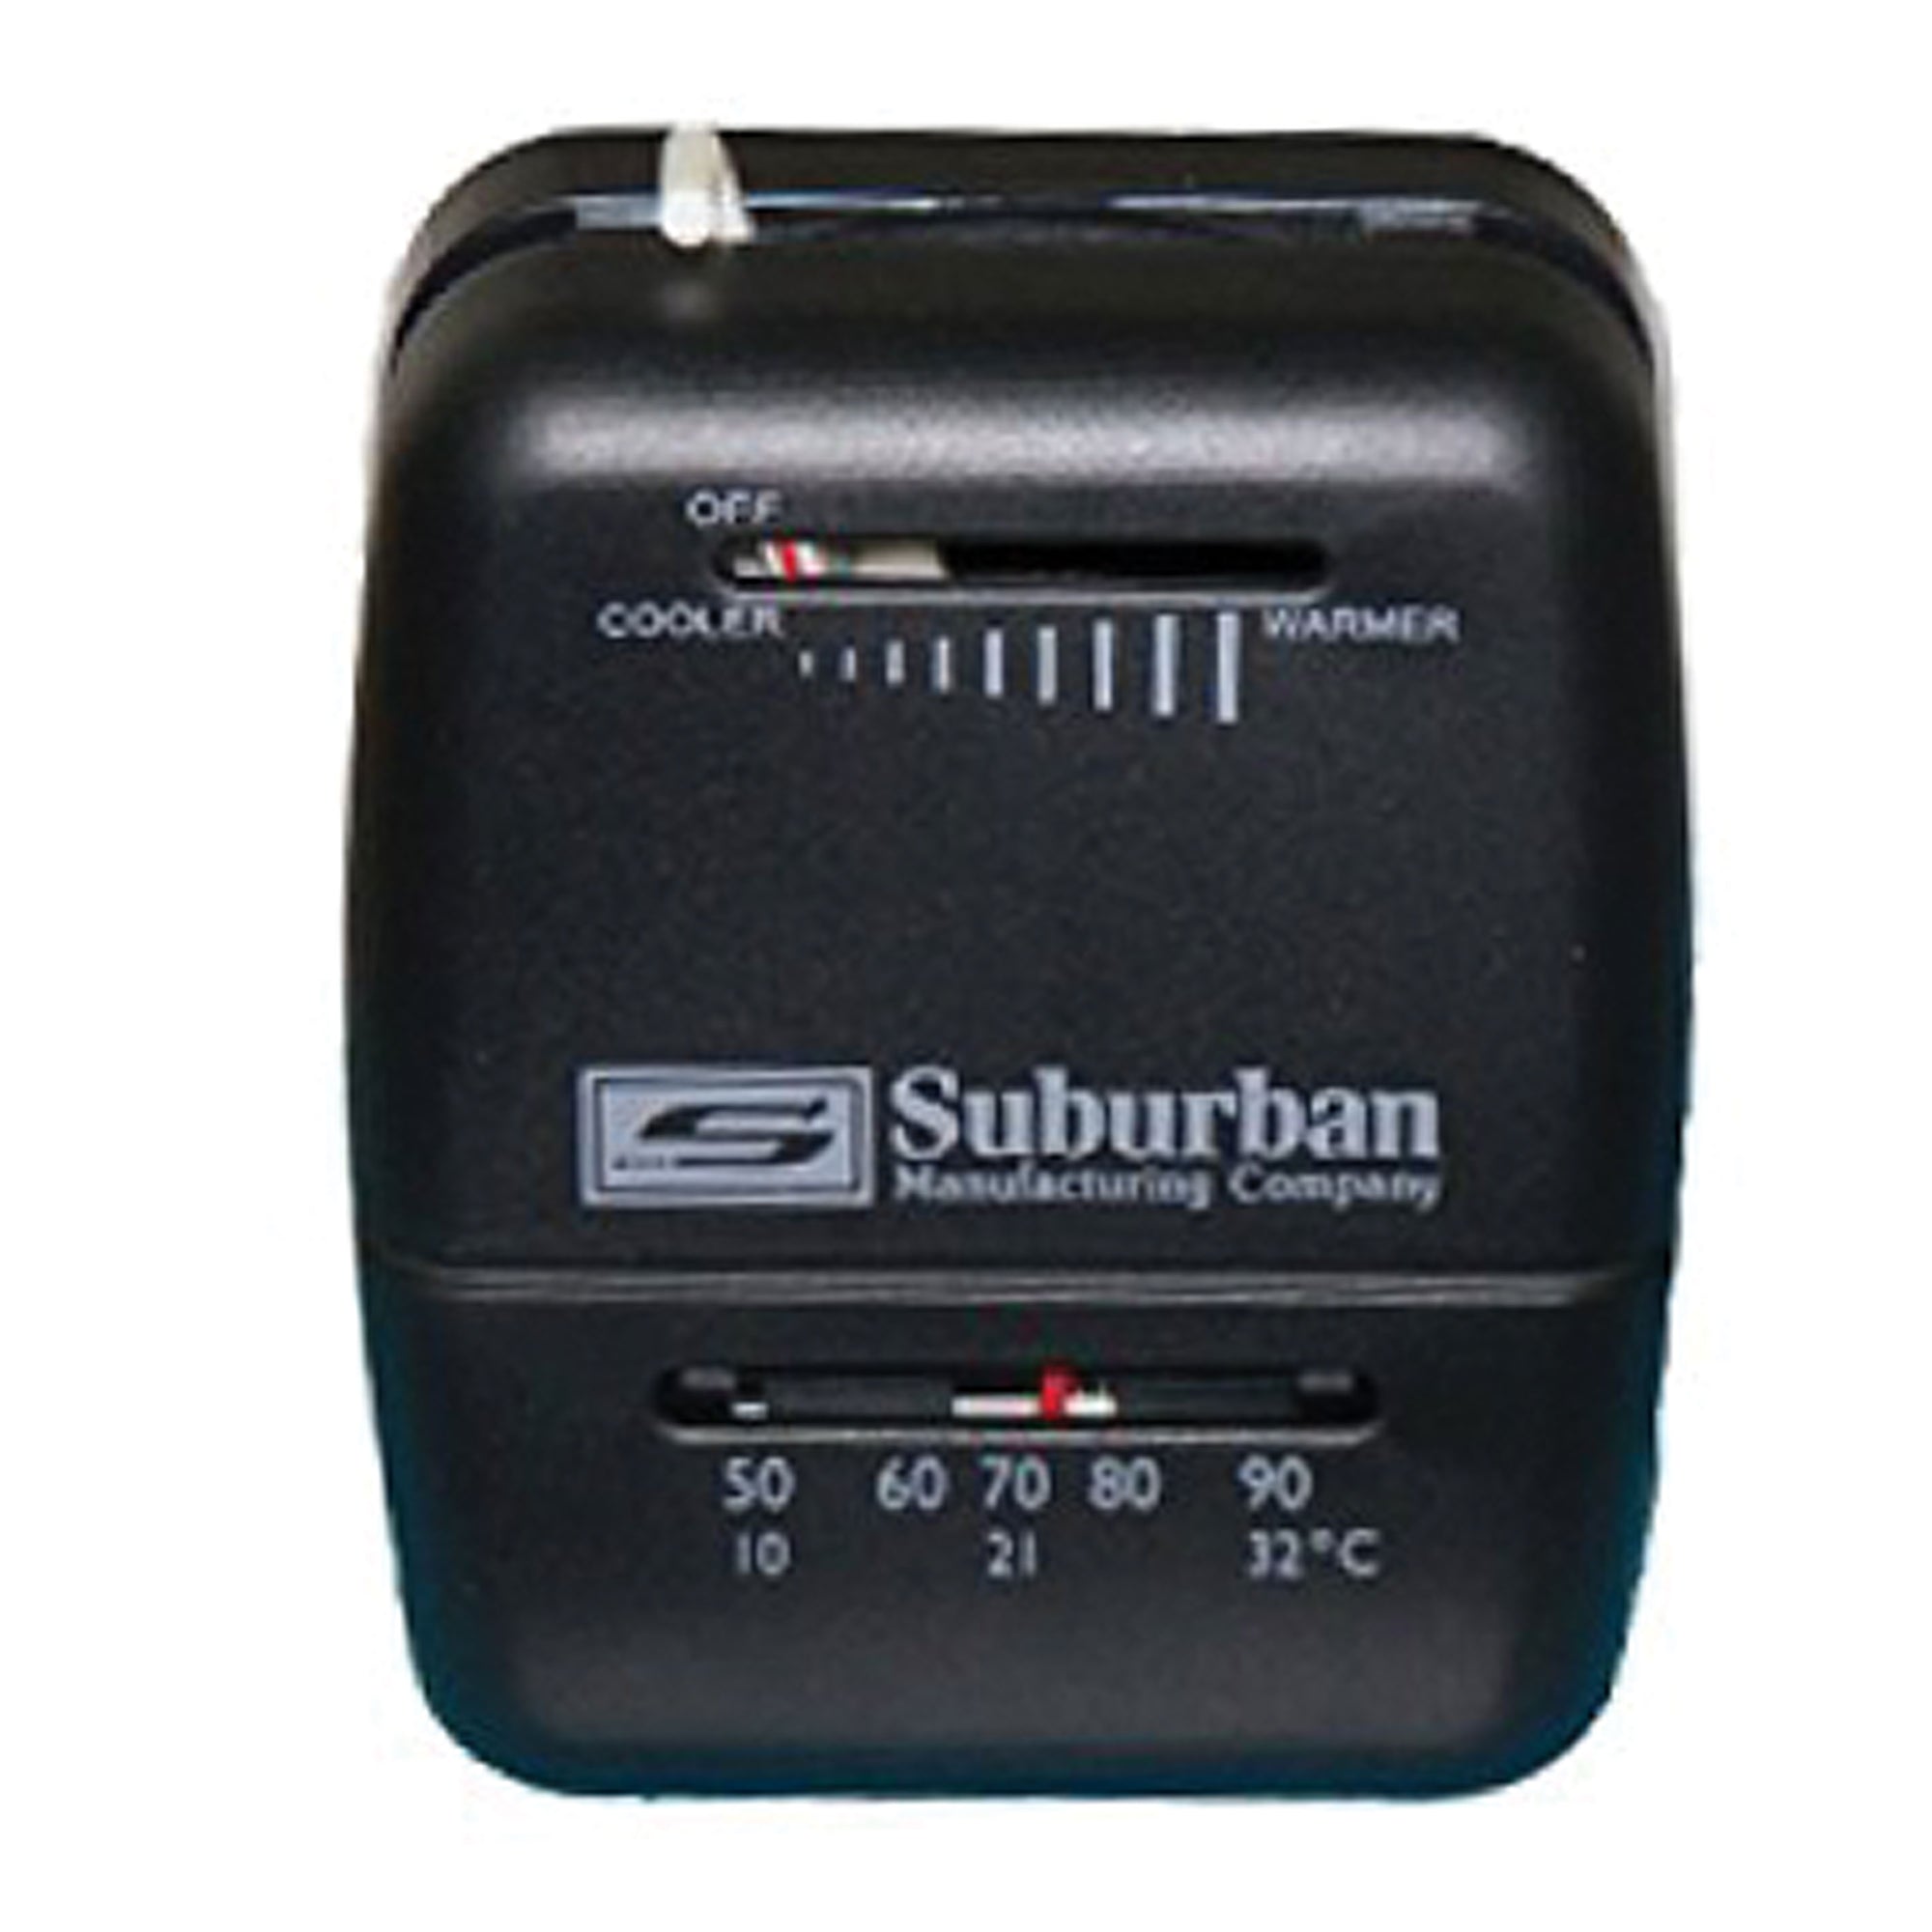 Suburban 161210 Wall Thermostat - Black